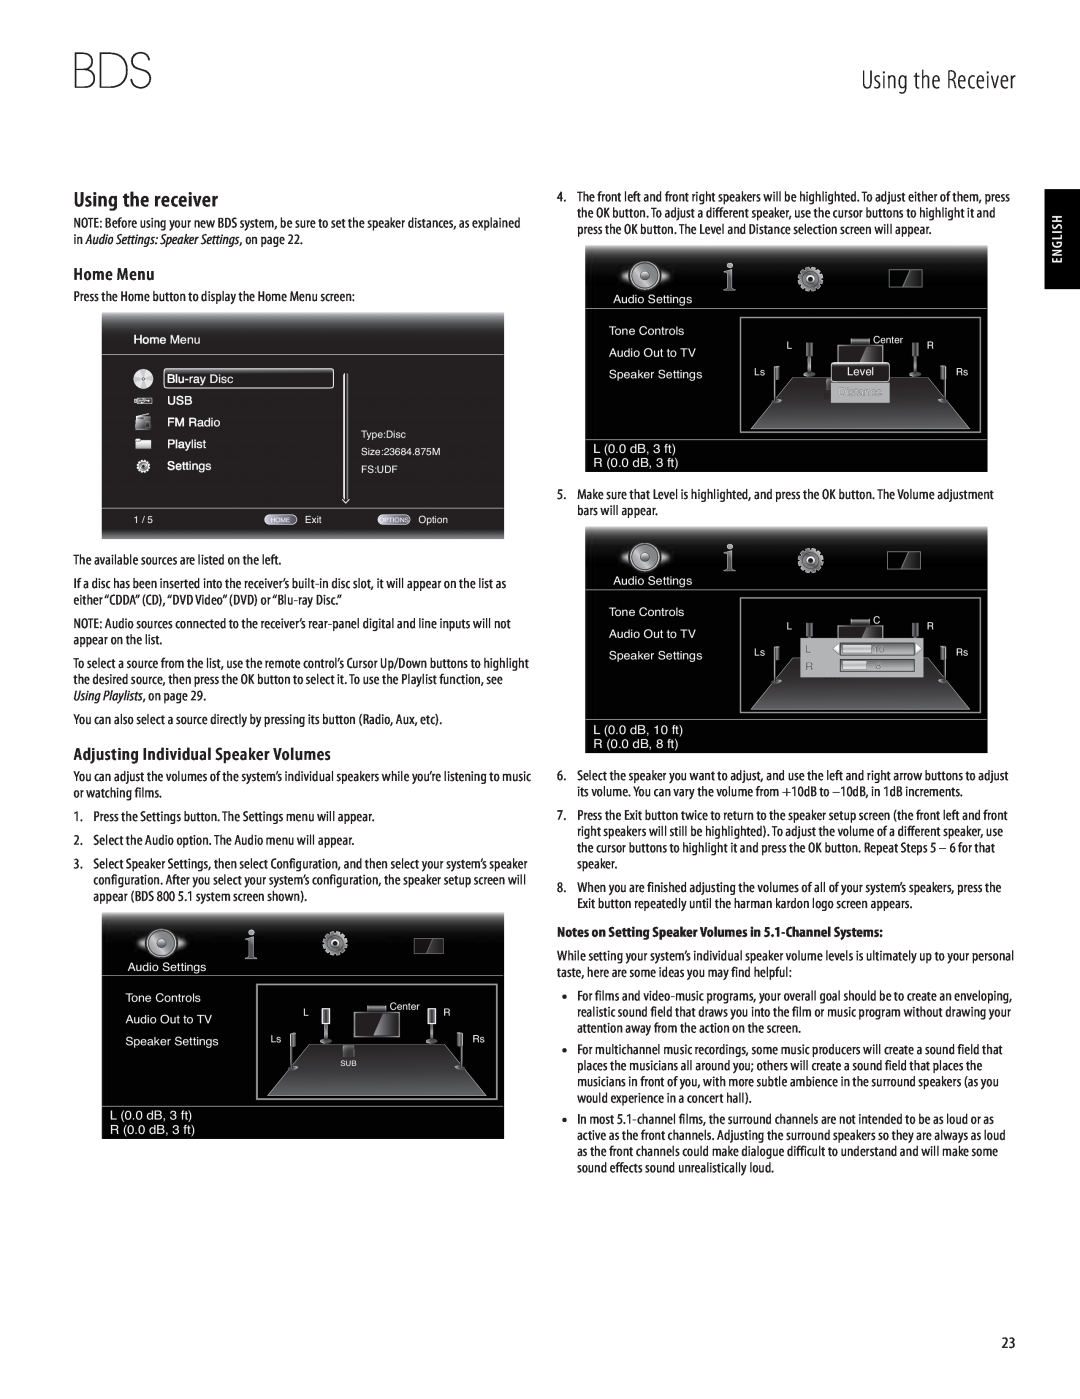 Harman-Kardon 950-0321-001 Using the Receiver, Using the receiver, Home Menu, Adjusting Individual Speaker Volumes 